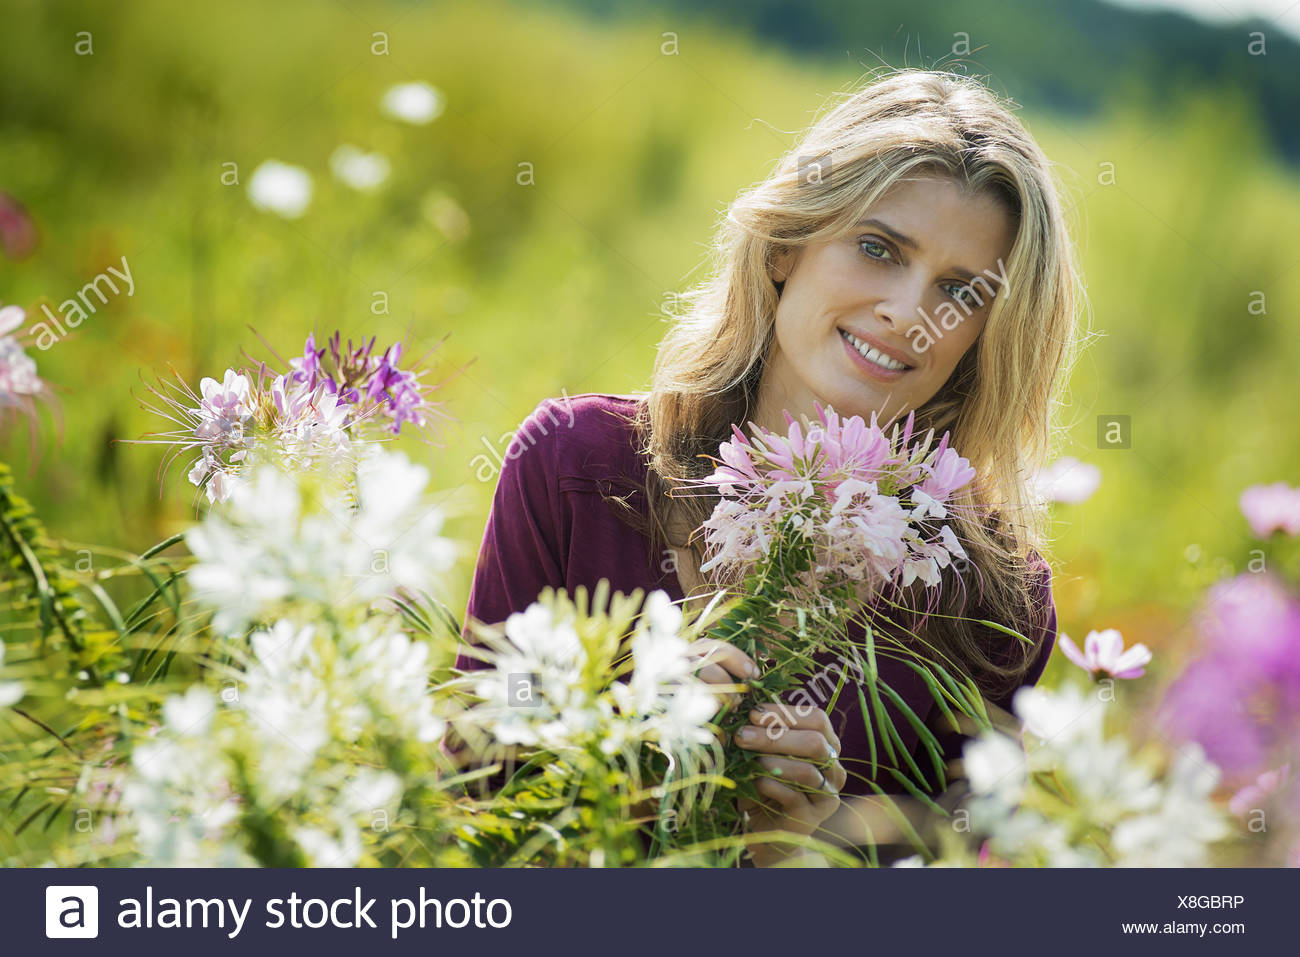 woodstock new york usa woman in garden of flowers on organic flower